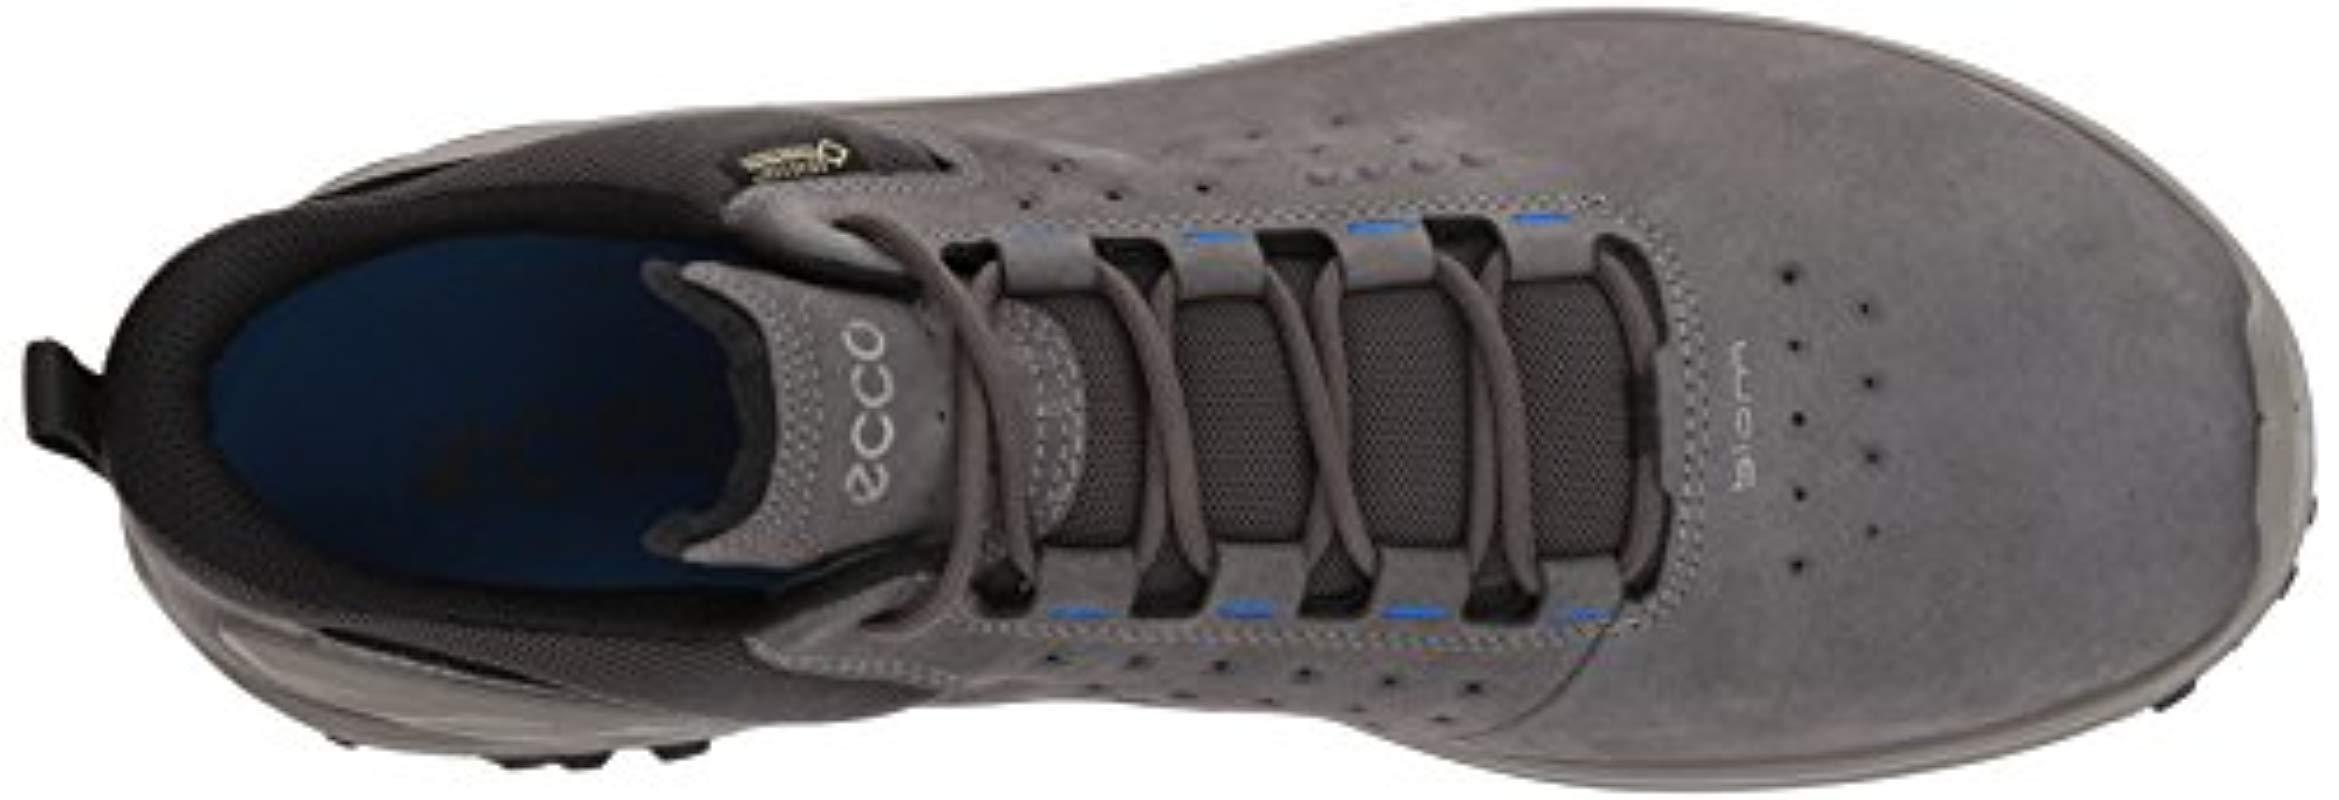 Fancy Beskatning Afsky Ecco Biom Venture Leather Gore-tex Tie Hiking Shoe for Men | Lyst